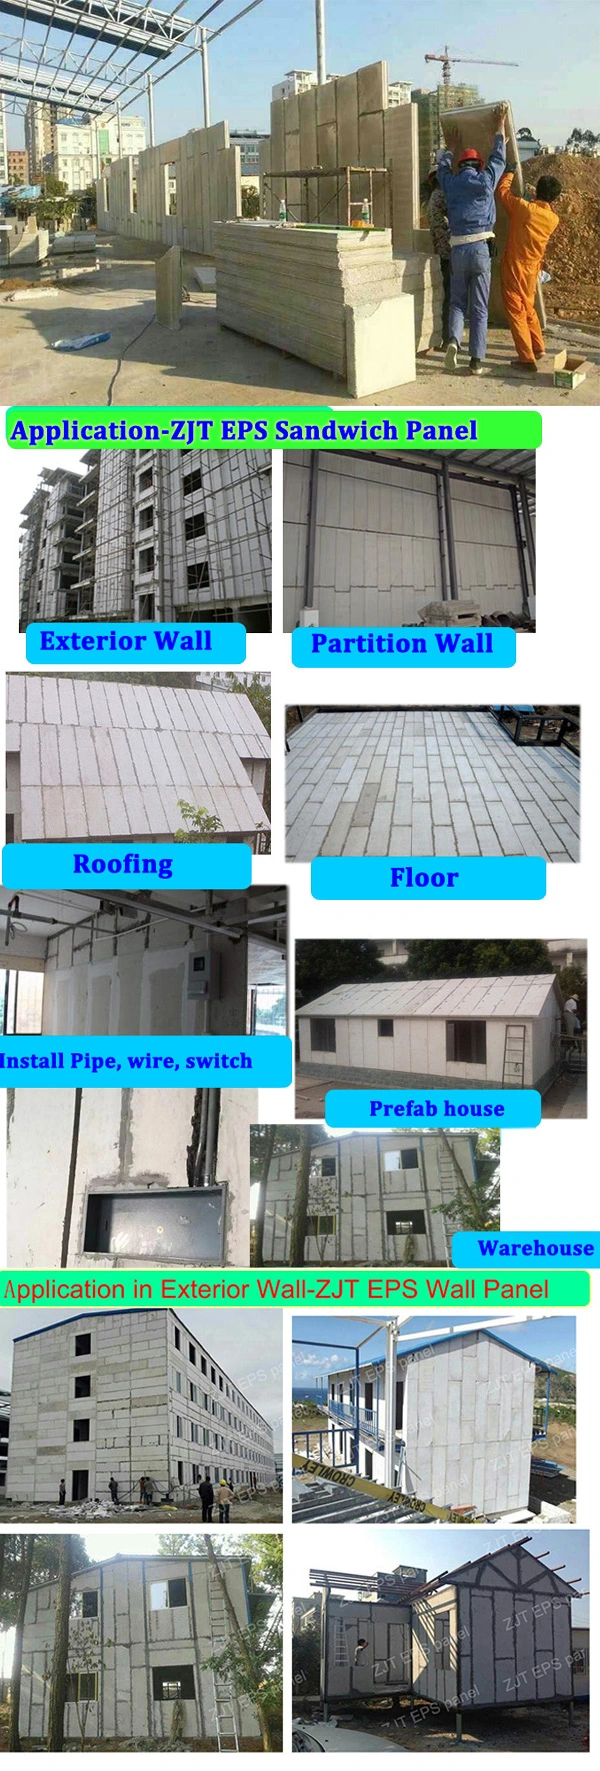 Lightweight Thermal Insulation EPS Fiber Cement Sandwich Roof Panels